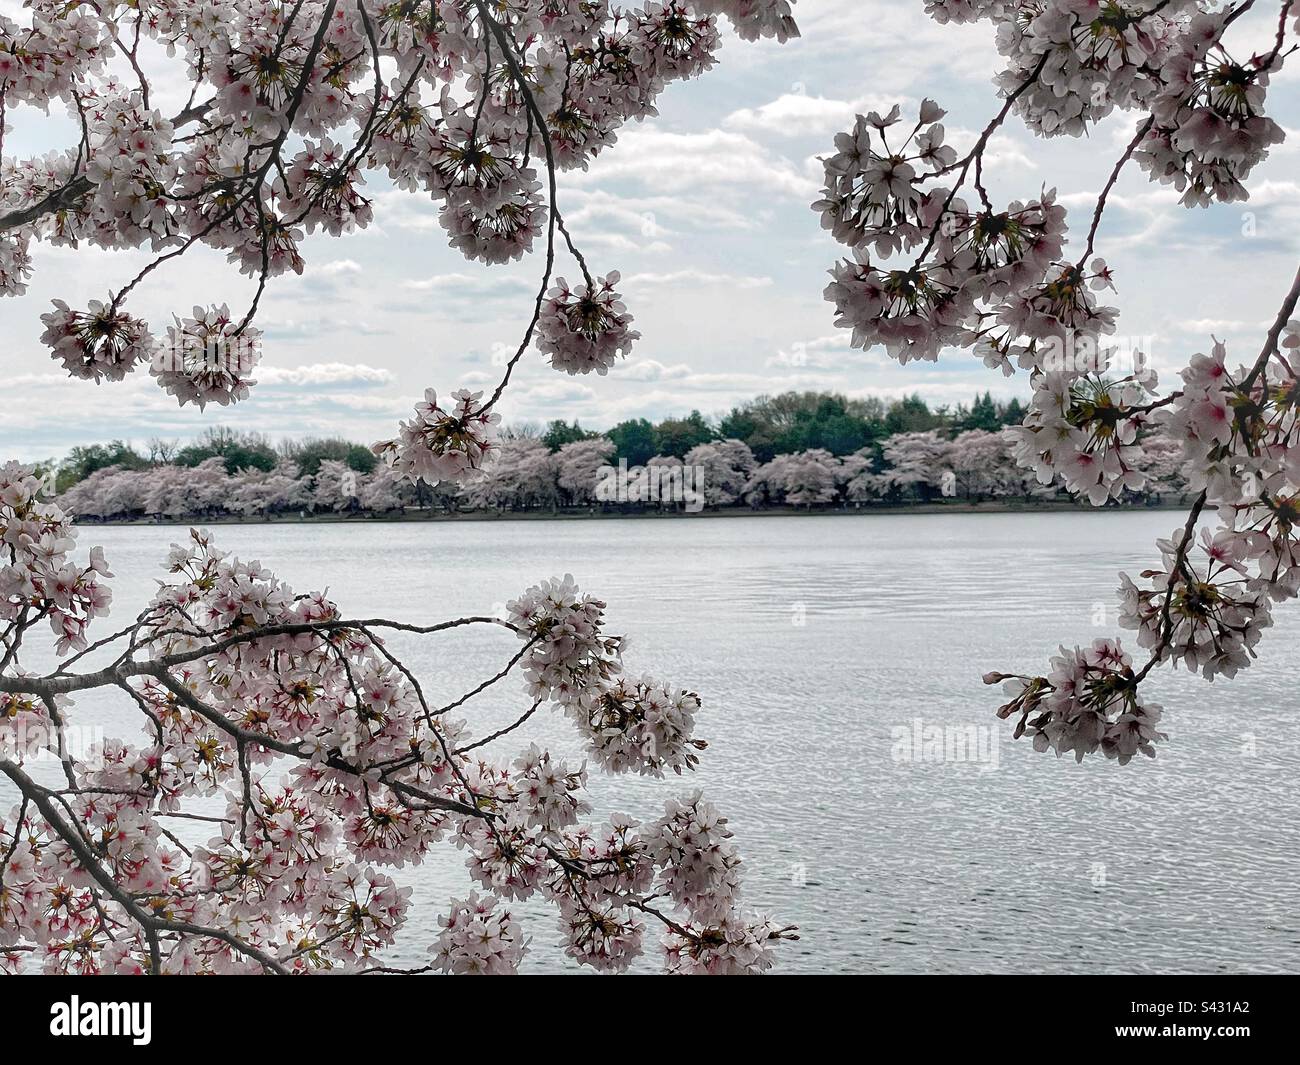 Flowering cherry blossom trees around the Tidal Basin in Washington, D.C. Stock Photo